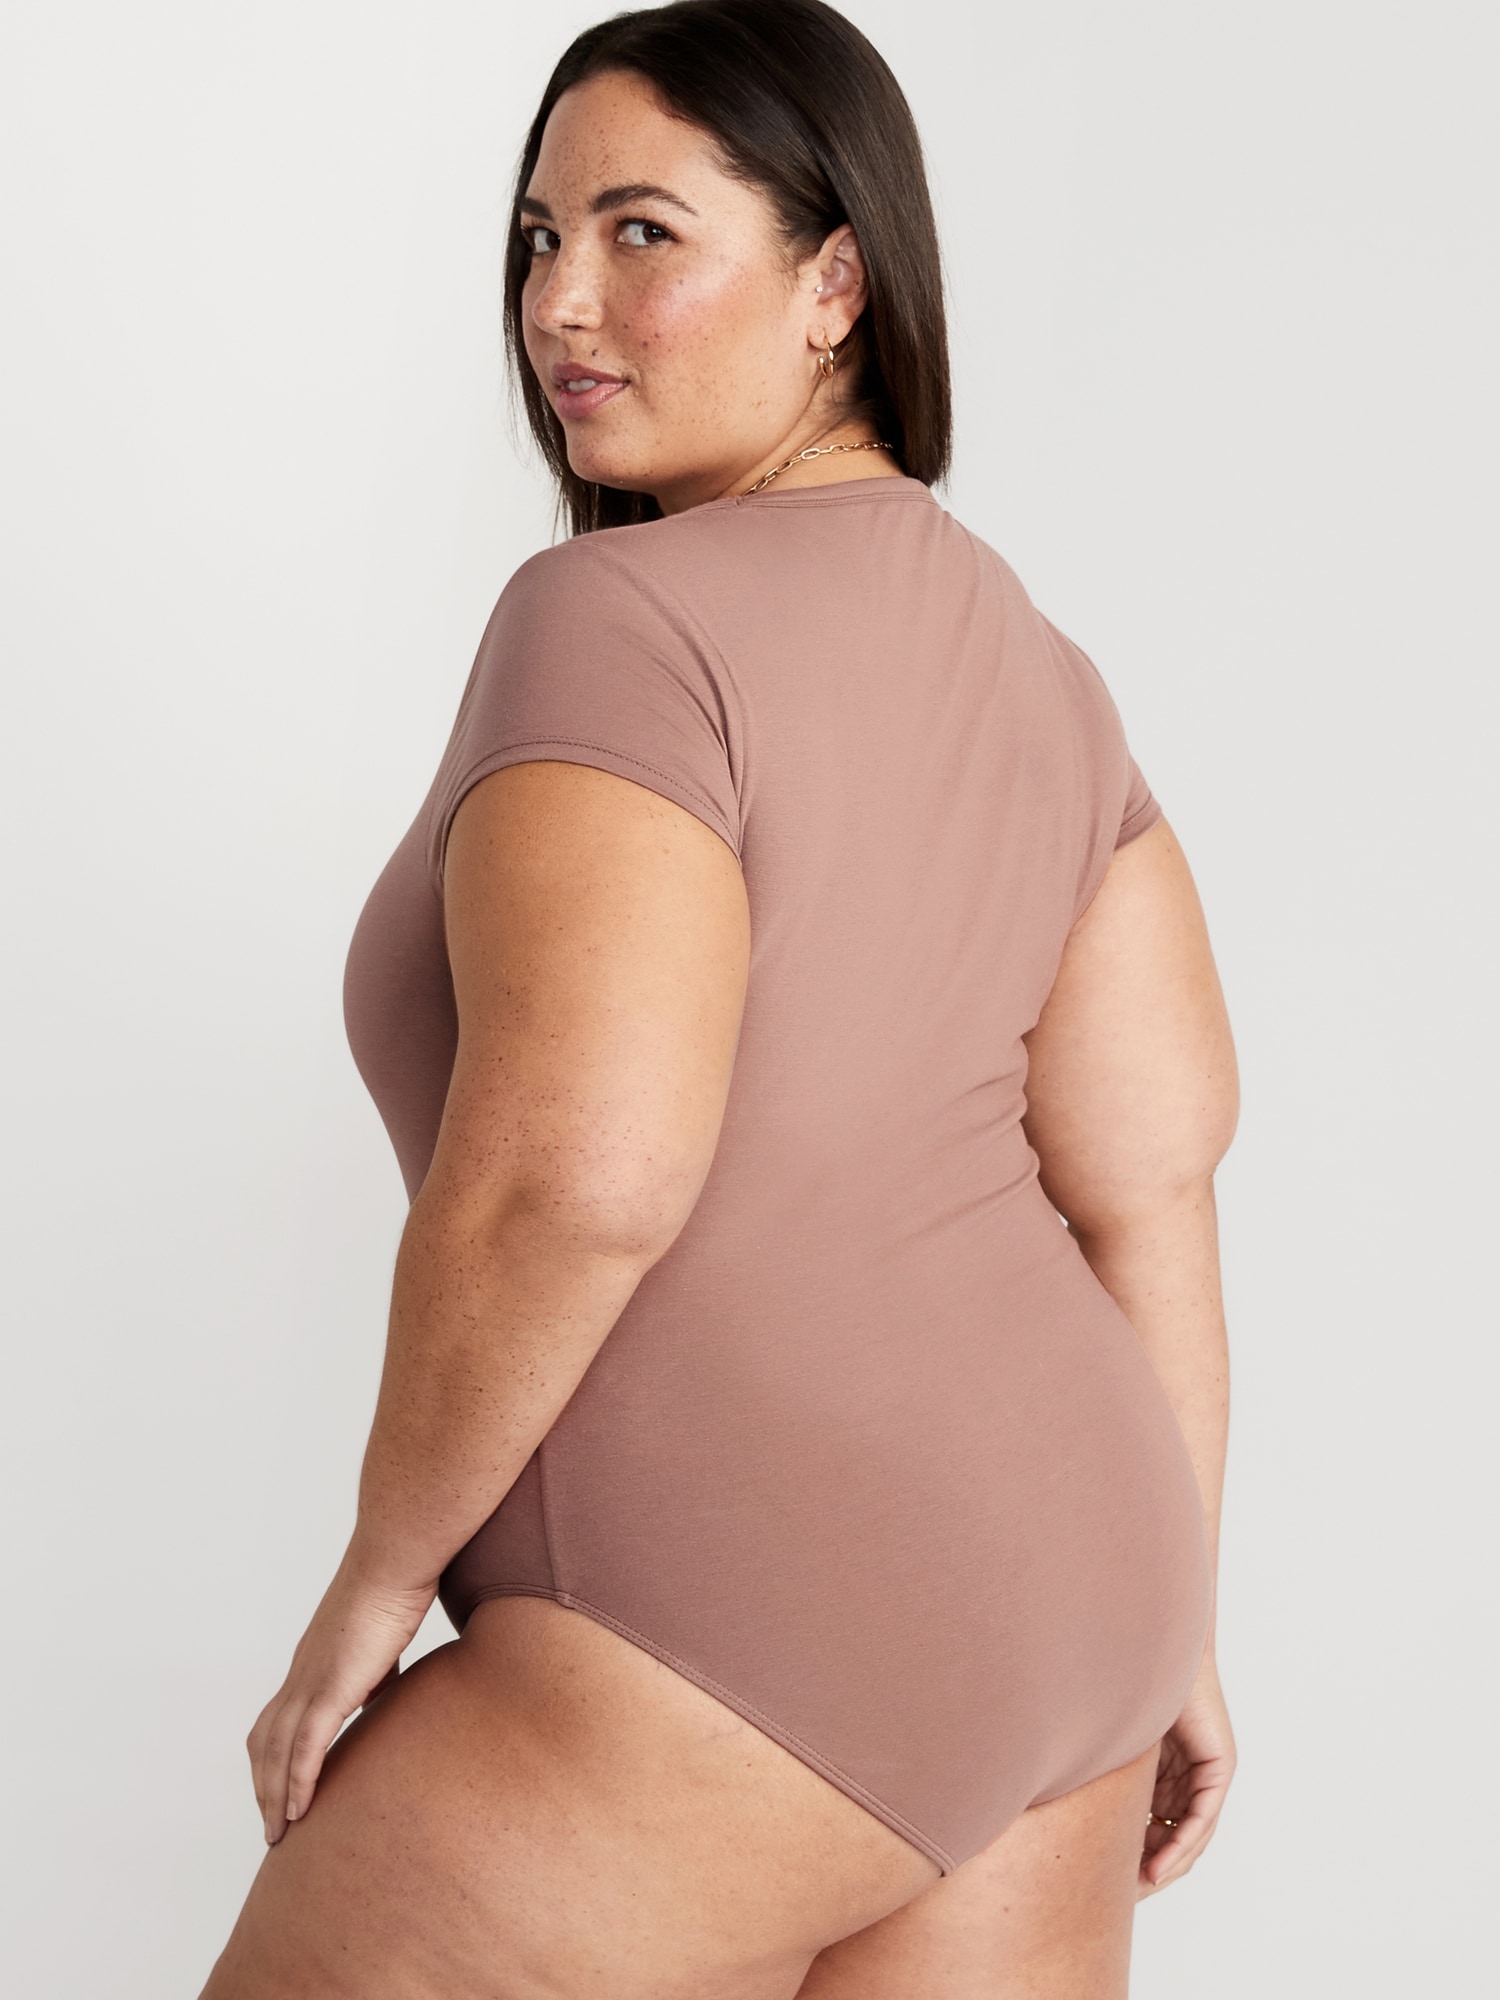 Women's Bodysuits Sexy Short Sleeve Shapewear Tank Tops Bodysuits